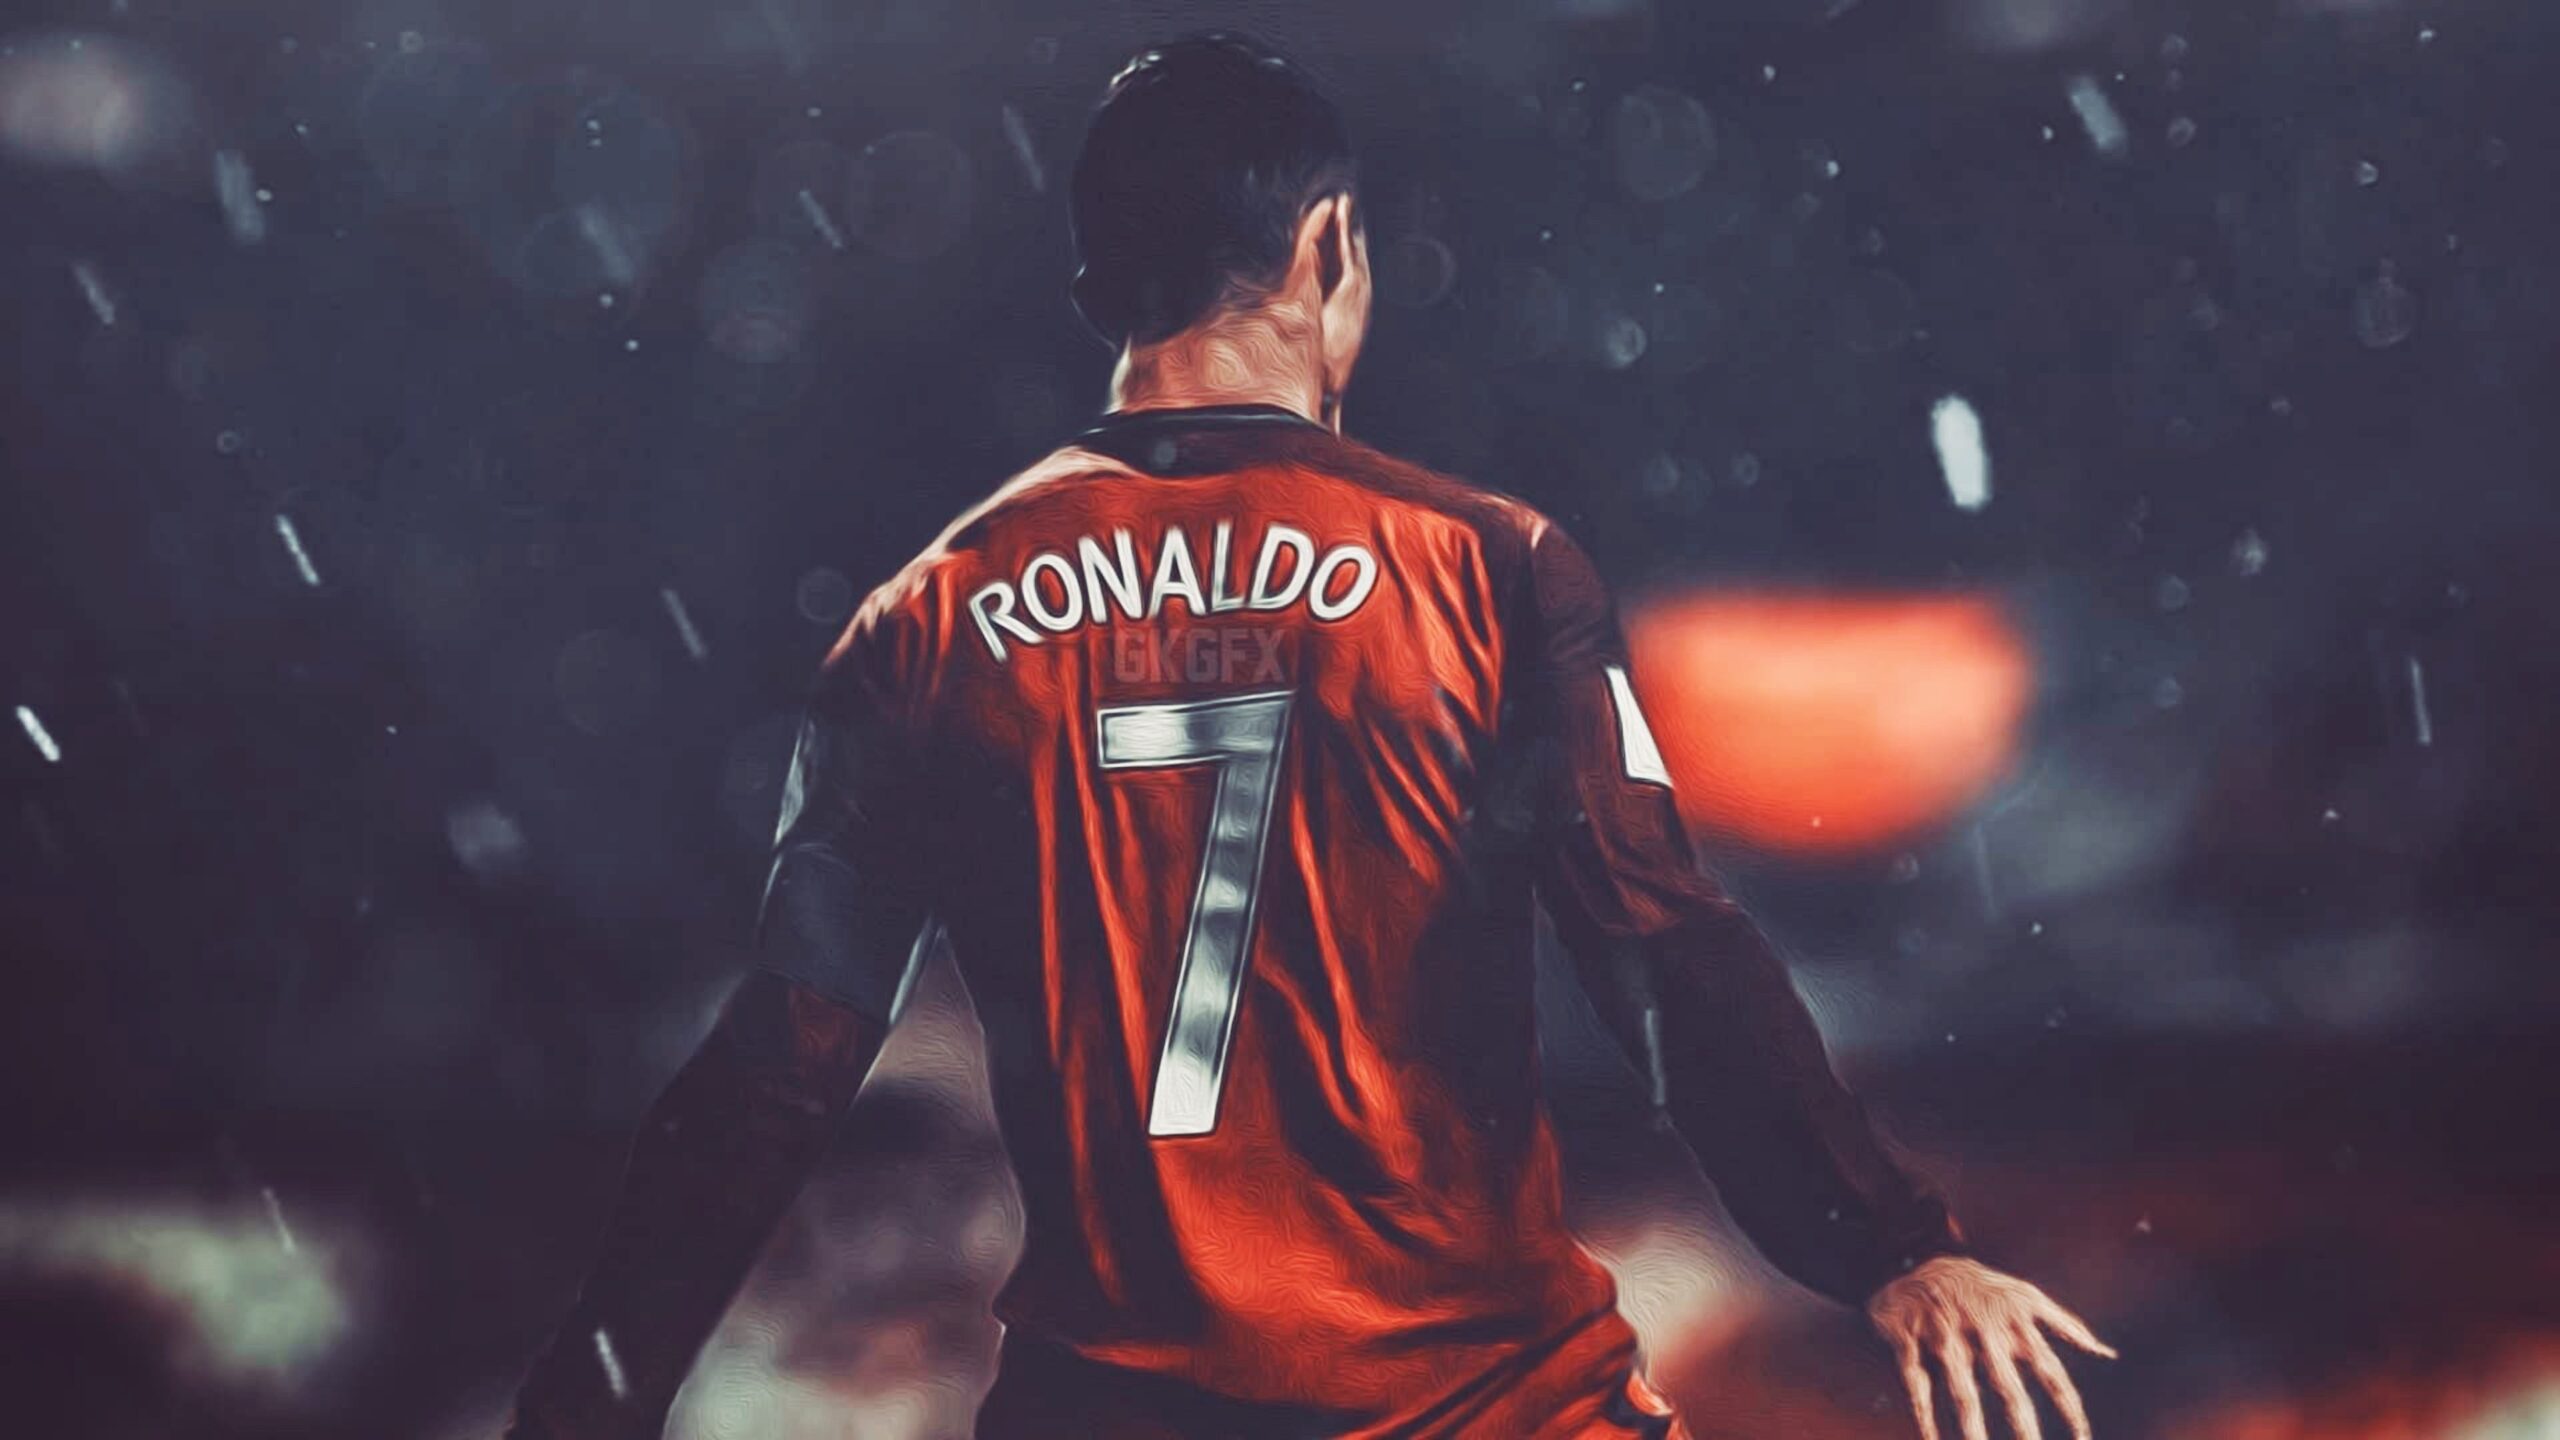 Cristiano Ronaldo 4k PC Wallpapers - Wallpaper Cave